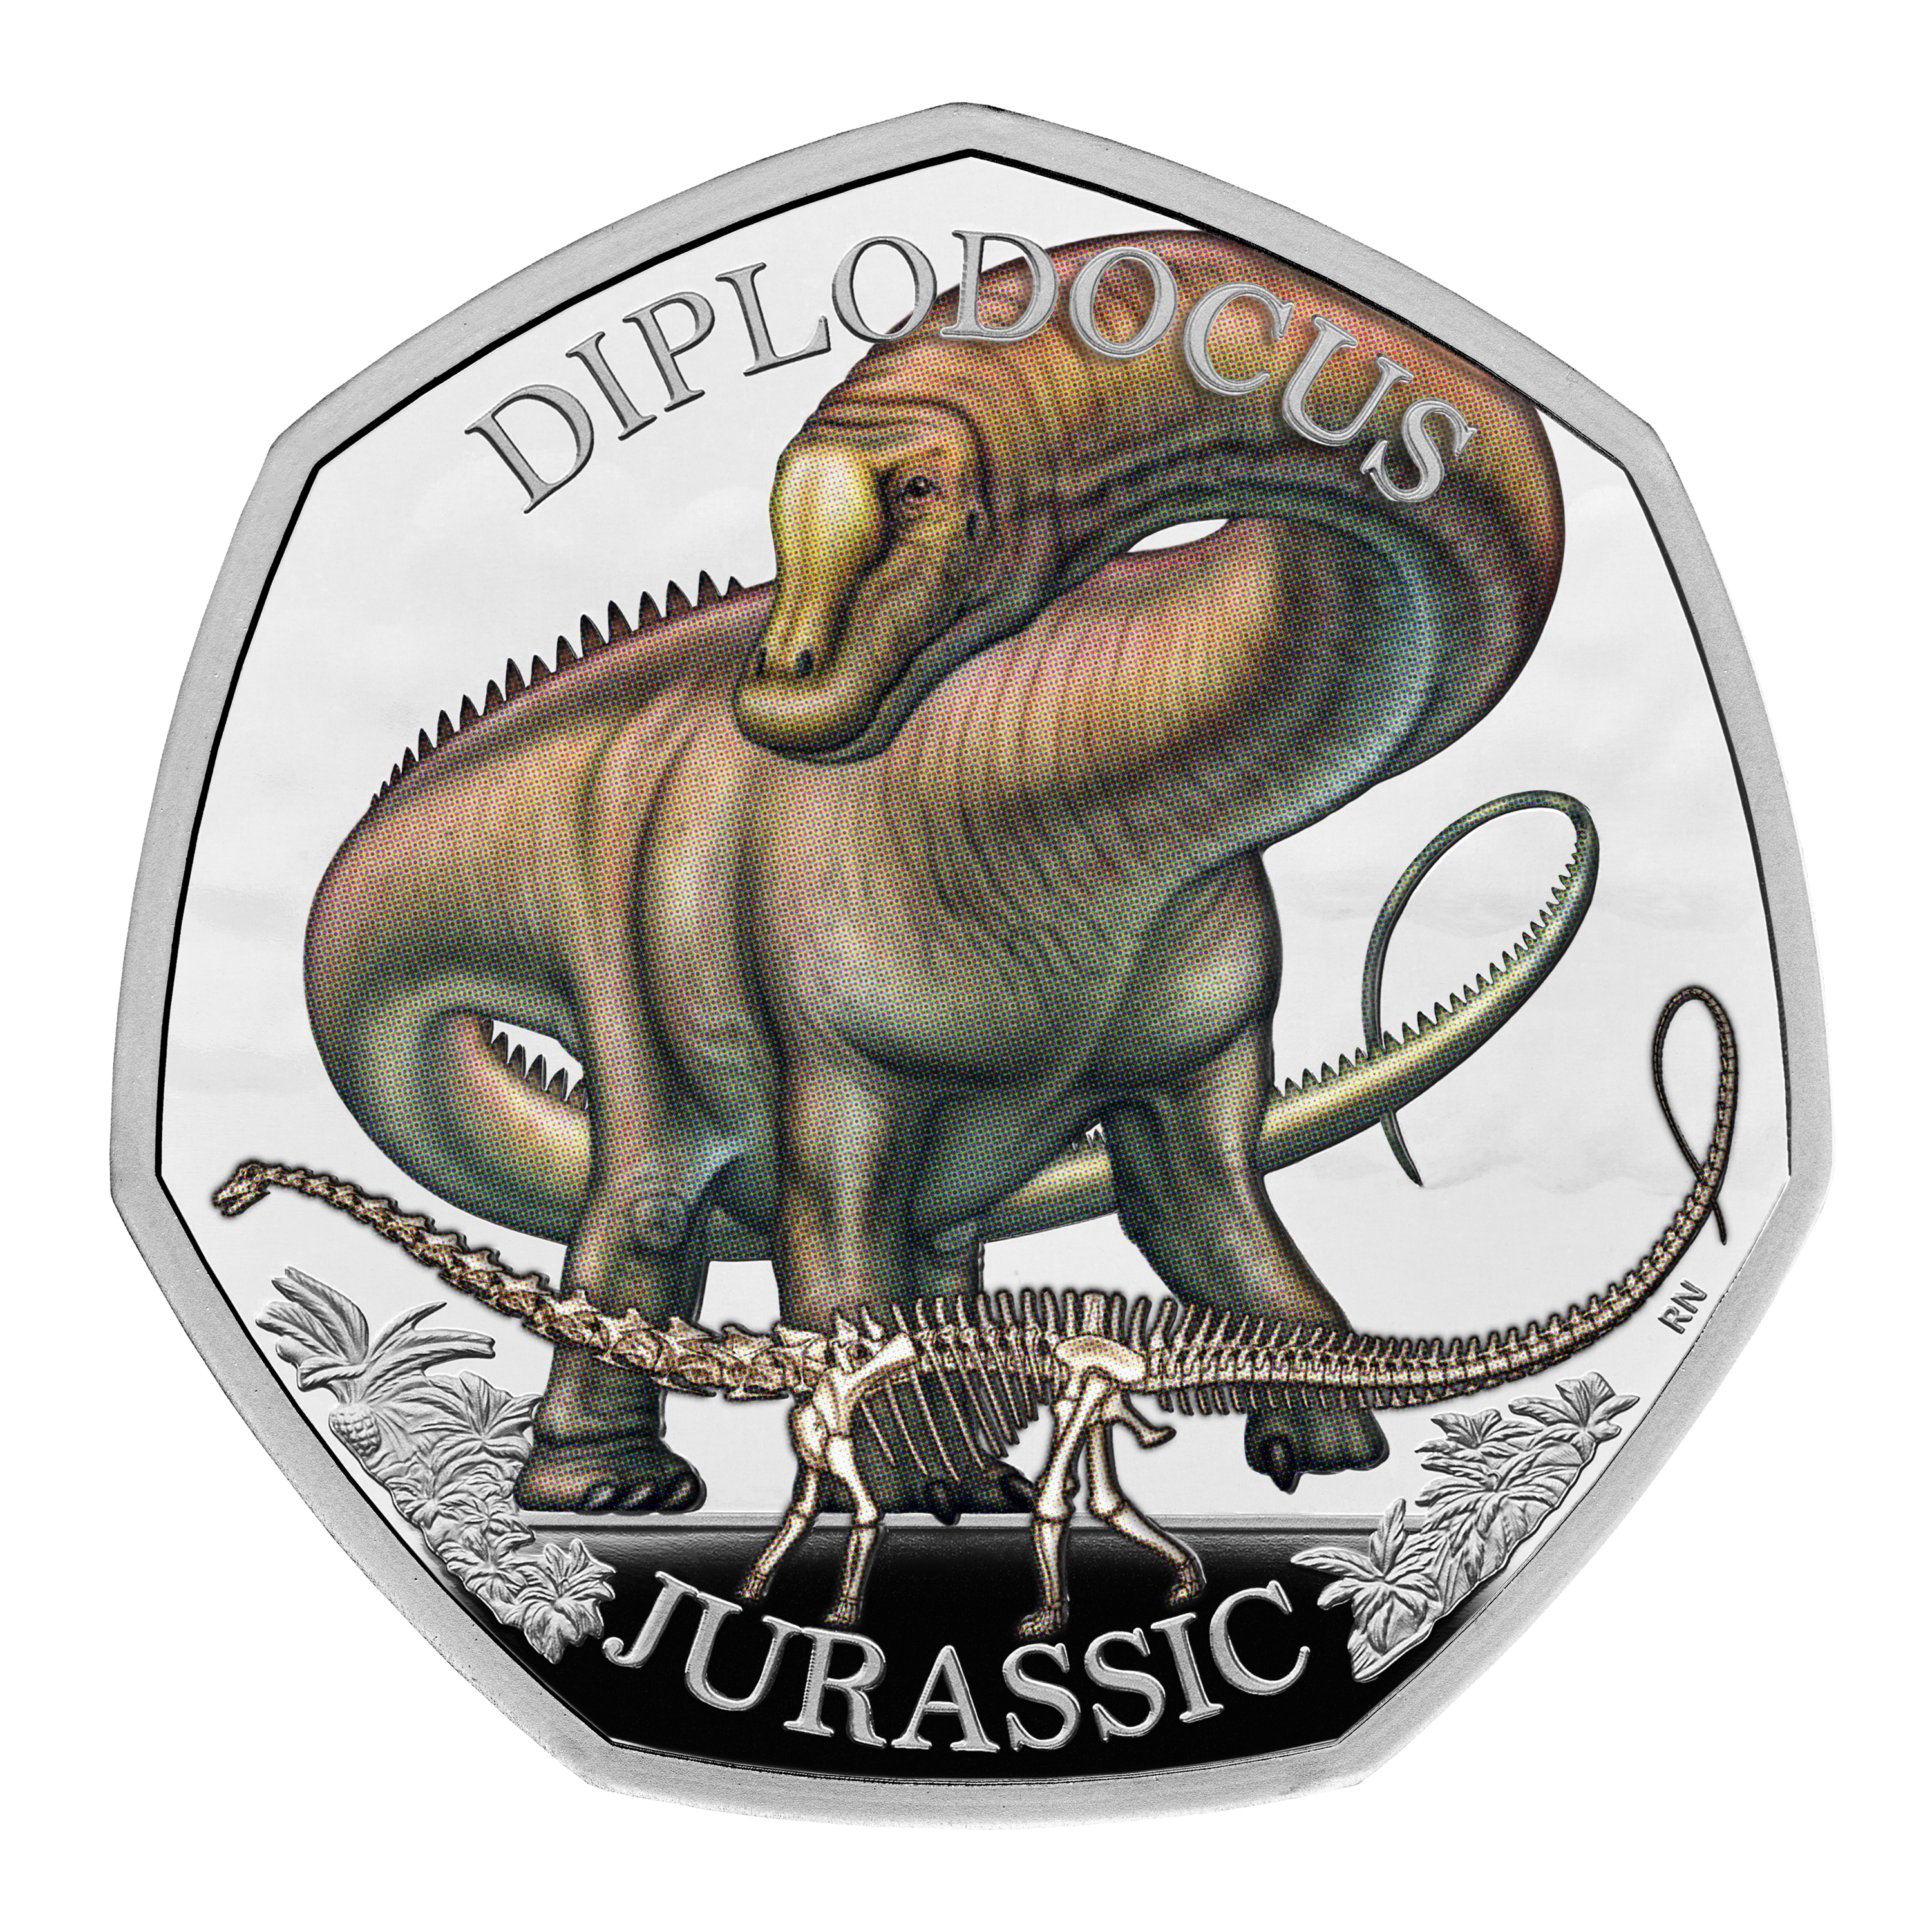 A diplodocus coin